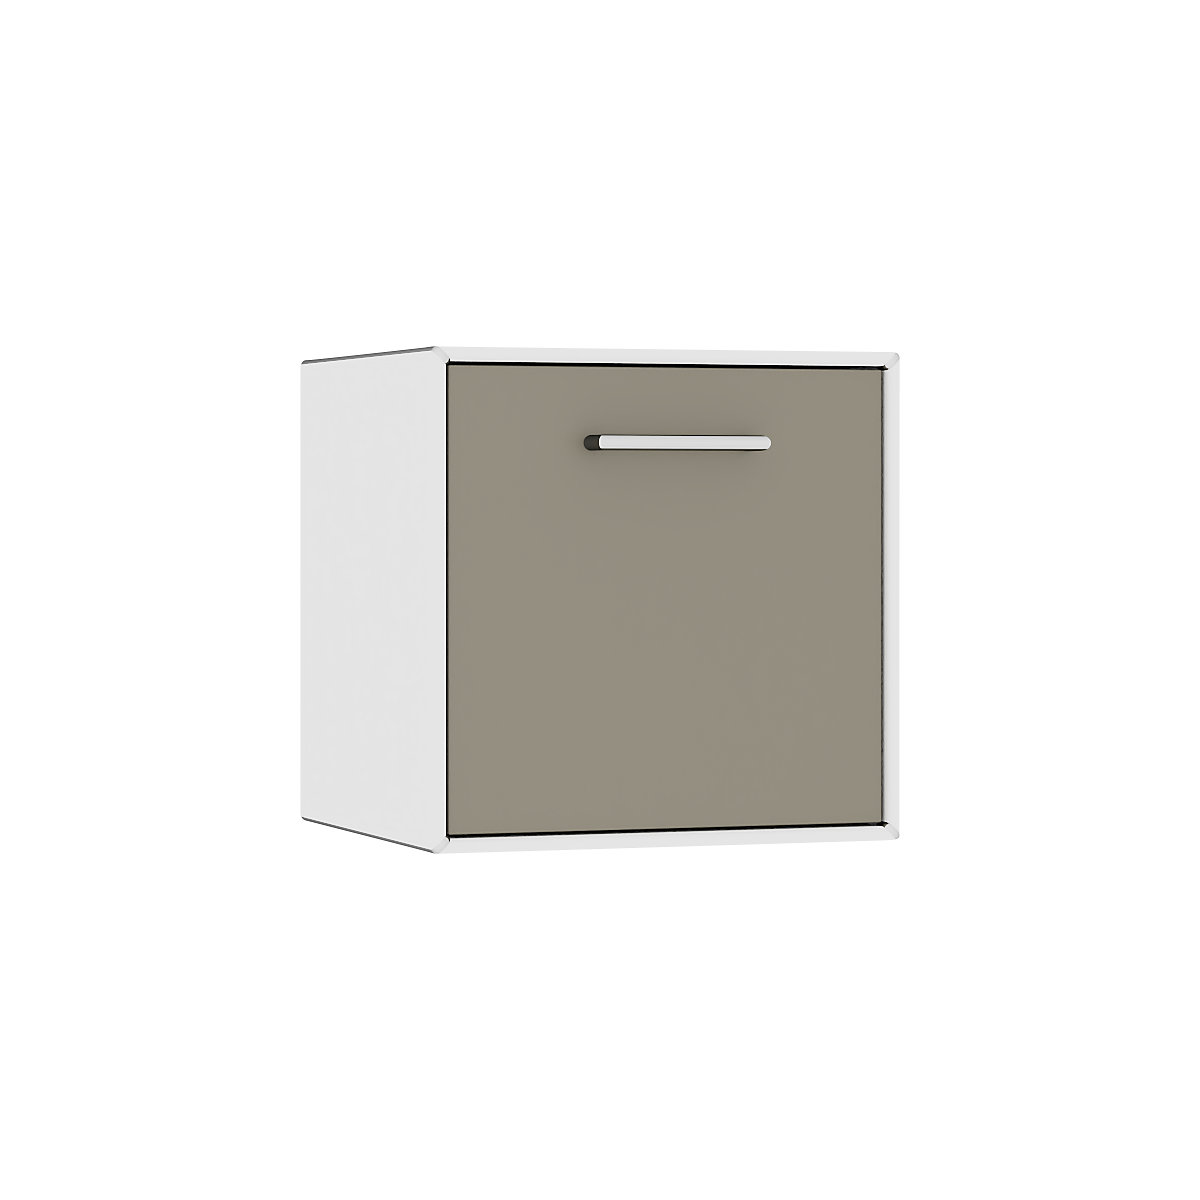 Compartimento individual, para colgar – mauser, 1 barra de bar abatible, anchura 385 mm, blanco puro / gris beige-2